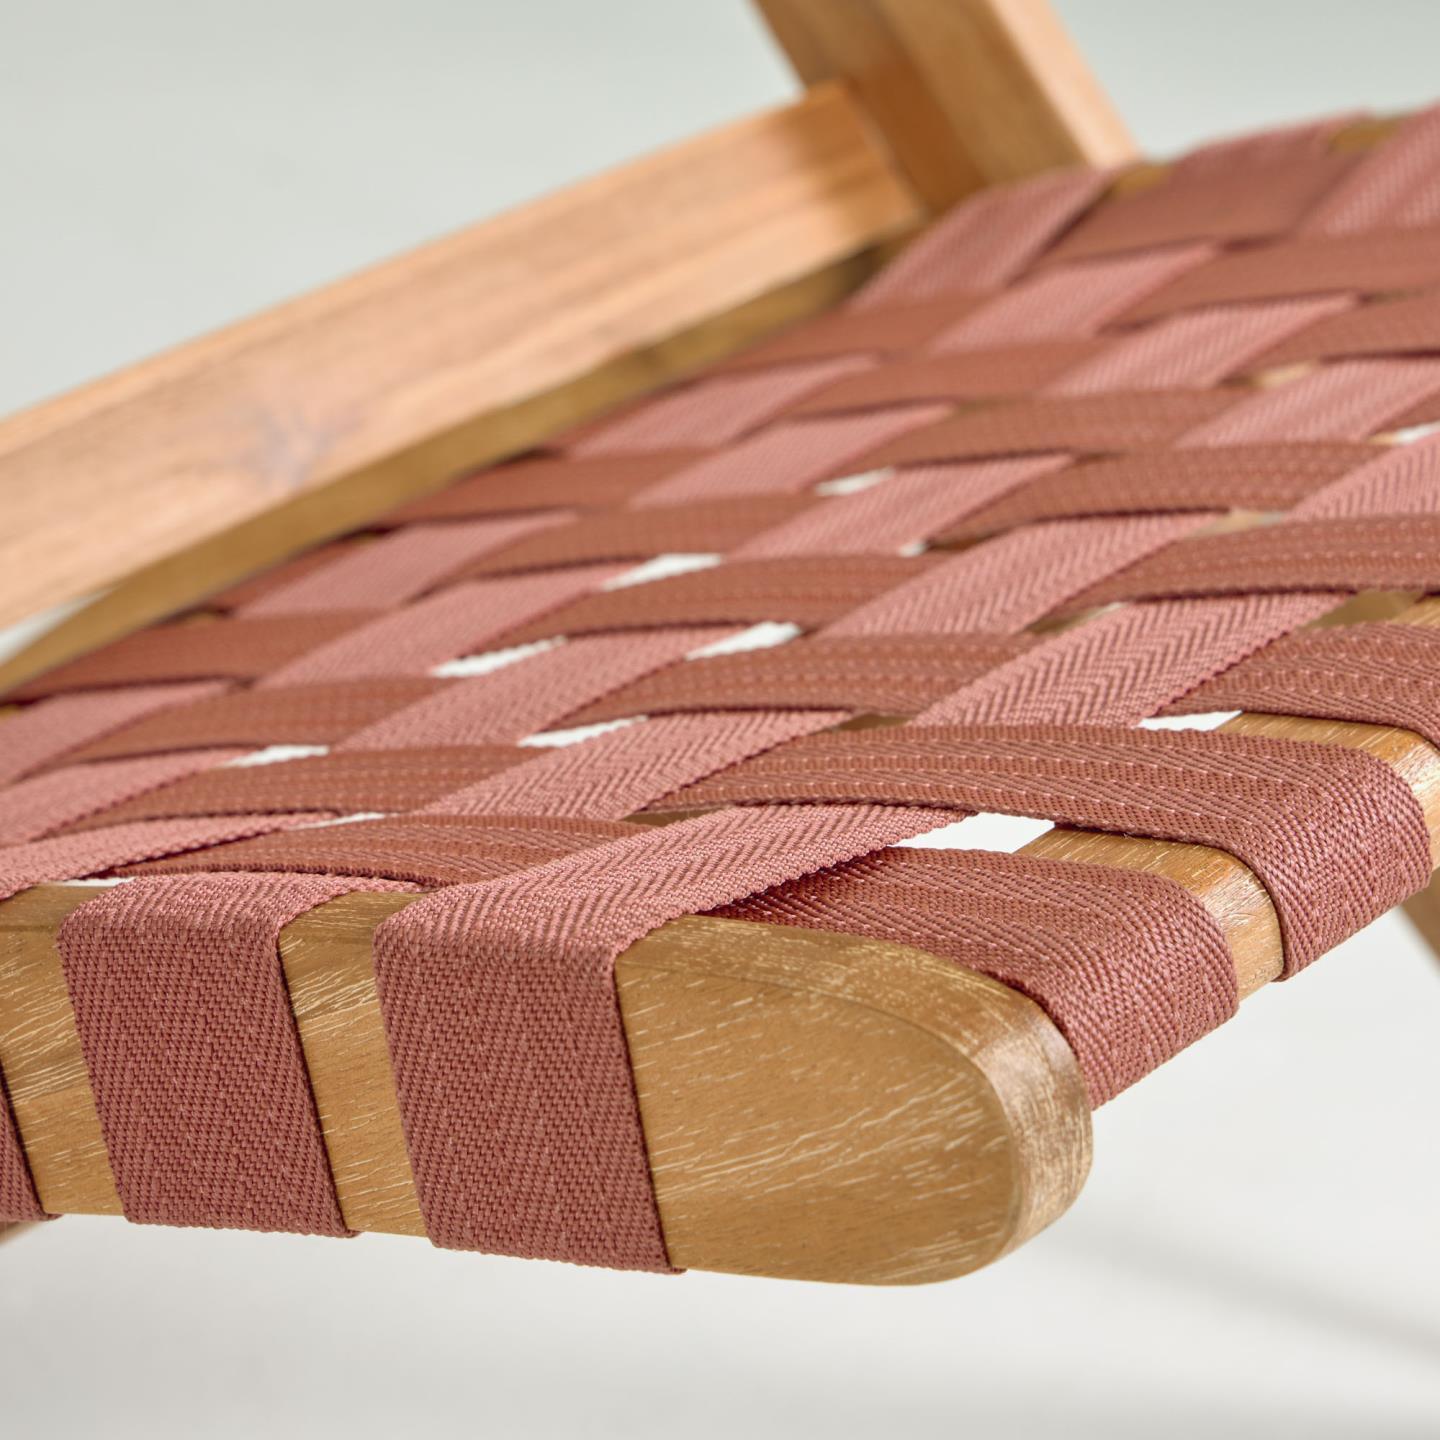 Fabric Folding Armchair